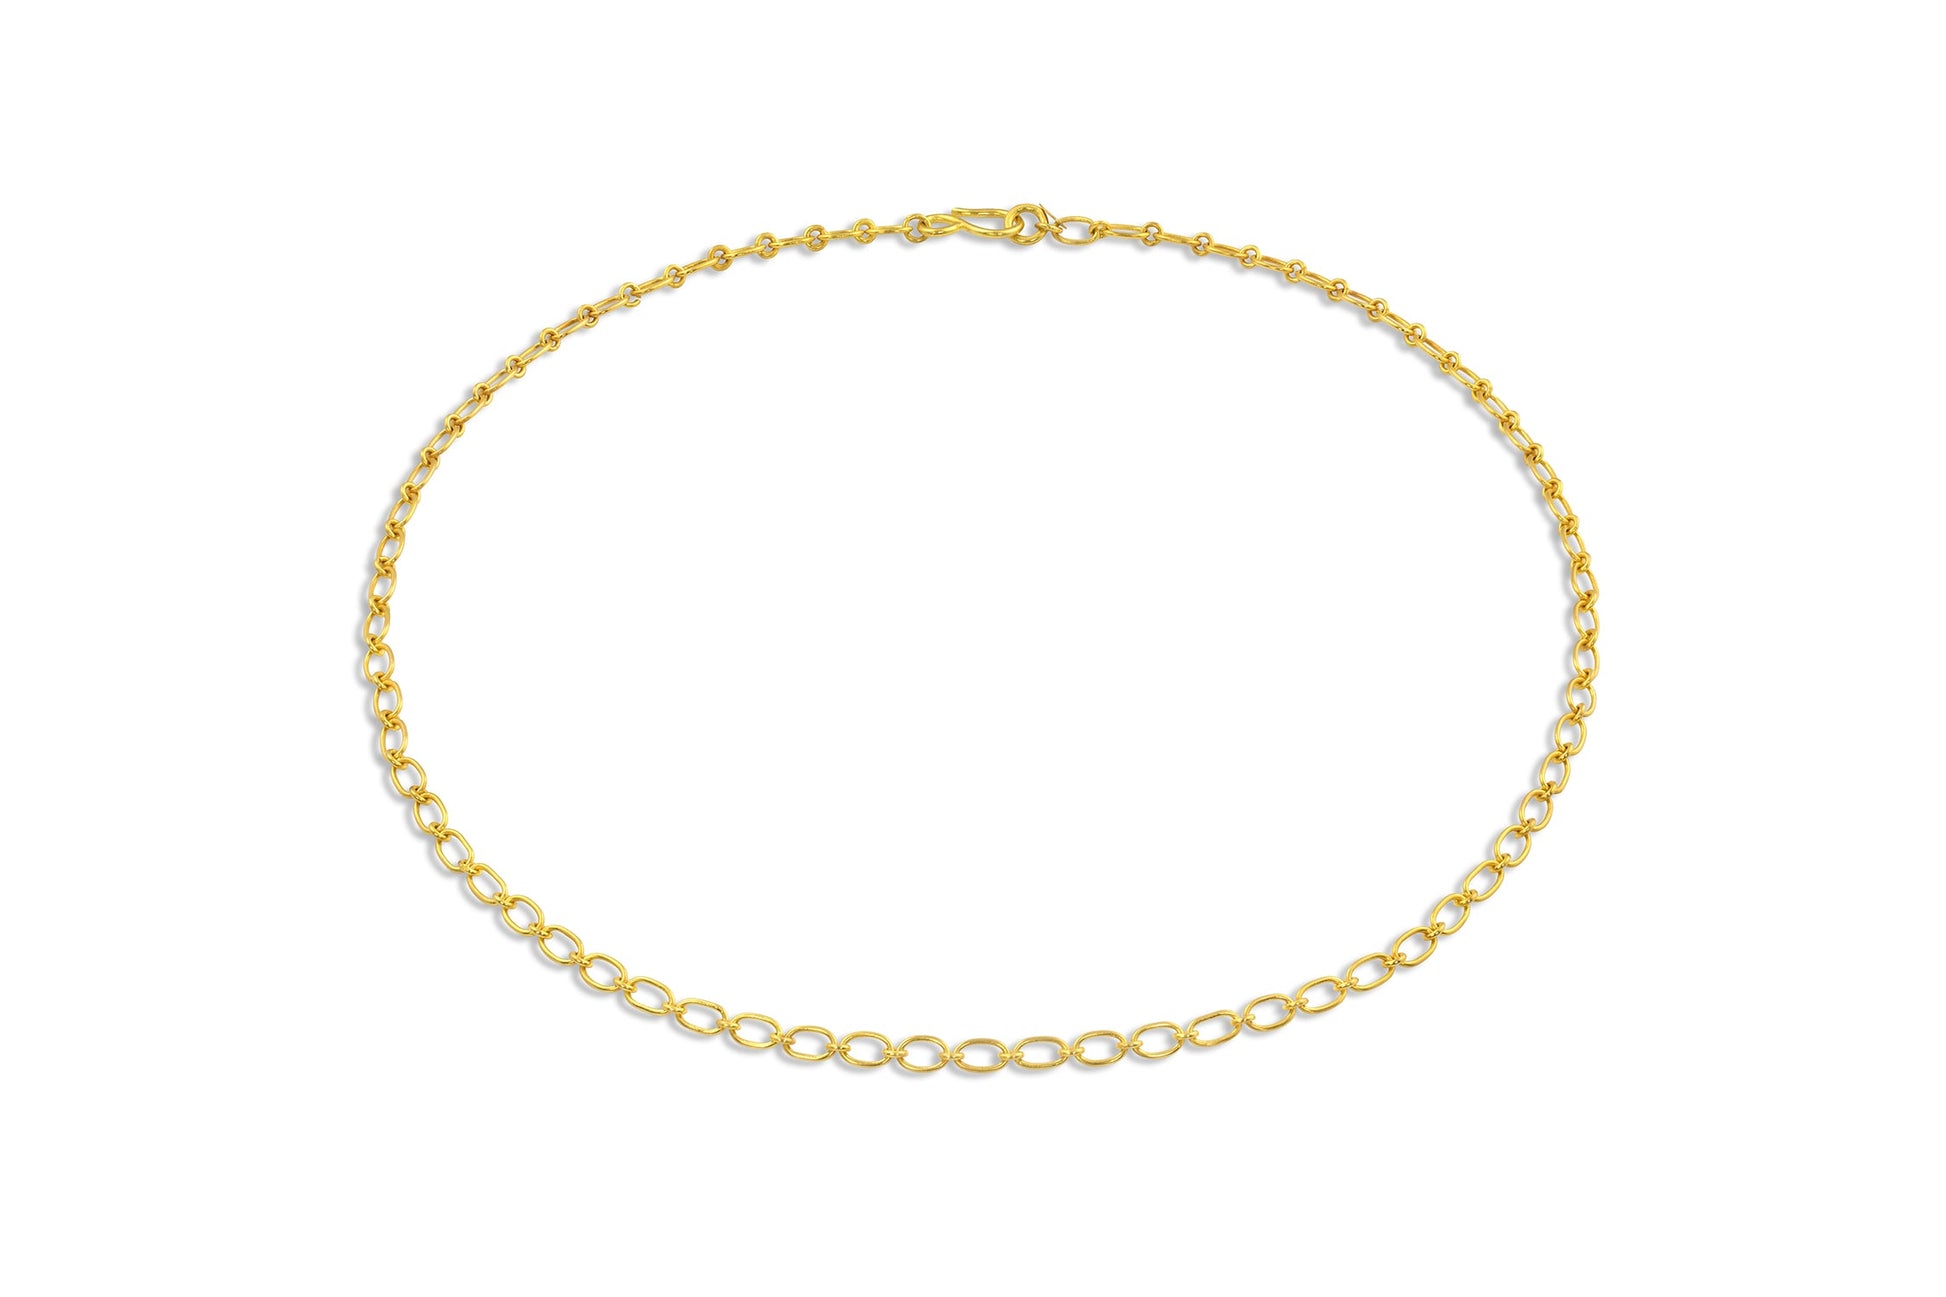 Cable Mini Link Chain Necklace-jewelry-Loren Nicole-Sorrel Sky Gallery